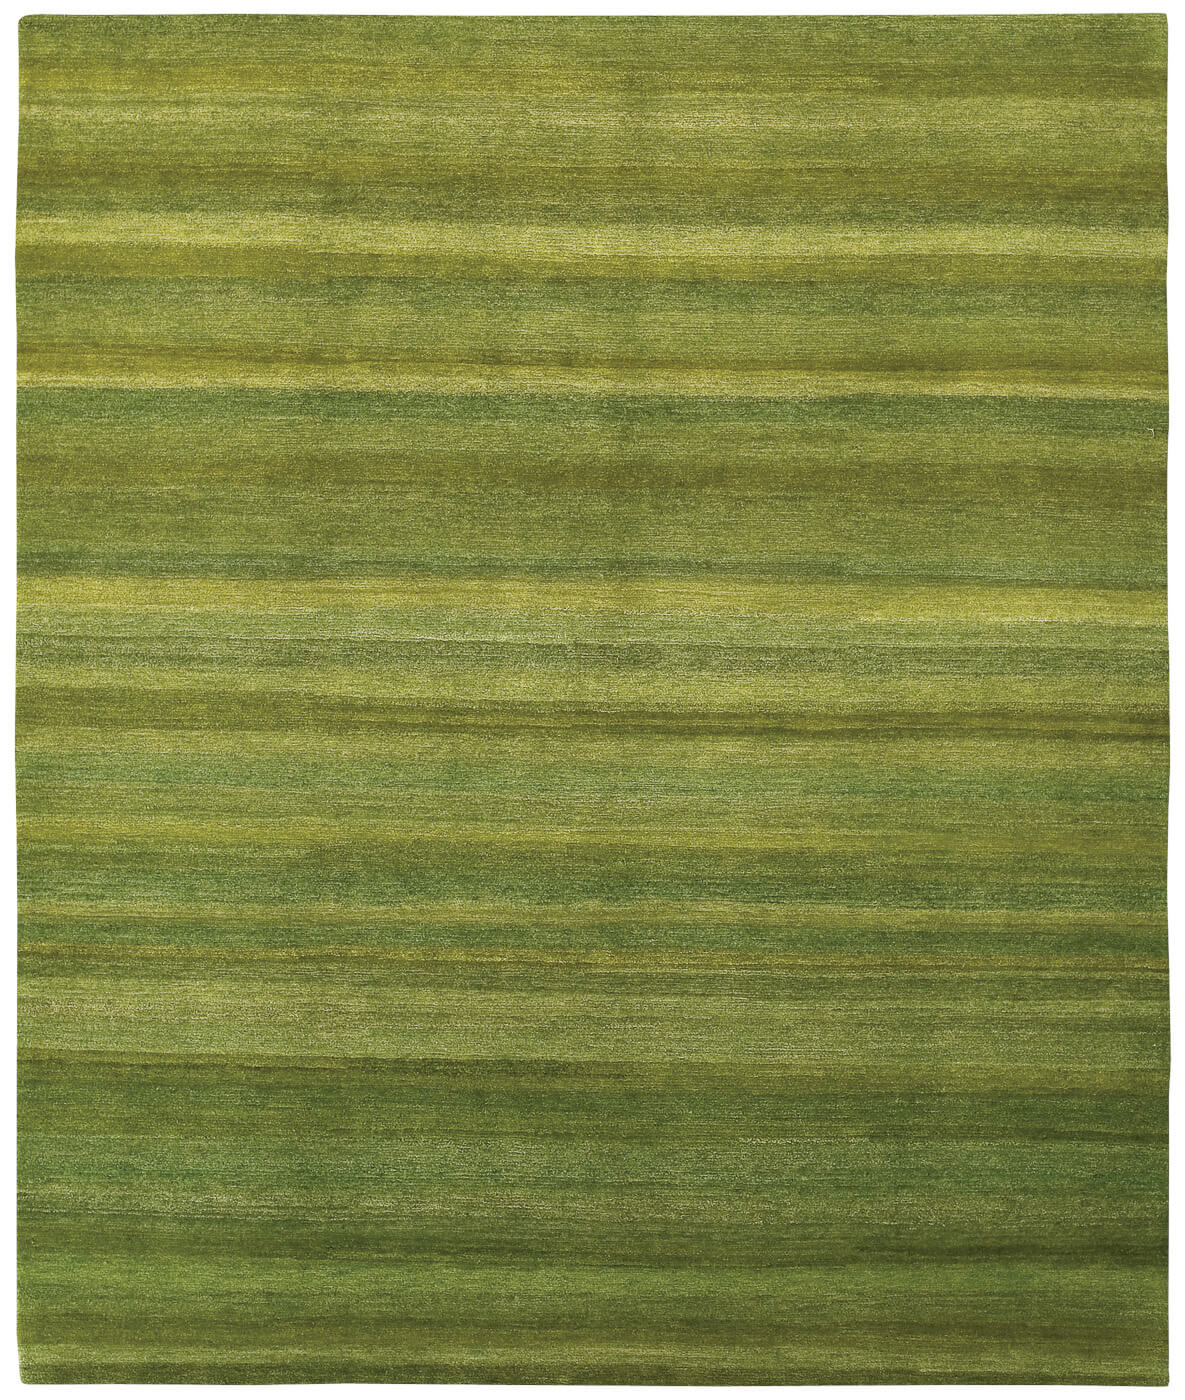 Ковер Gamba цвета зеленой травы от элитного бренда Jan Kath